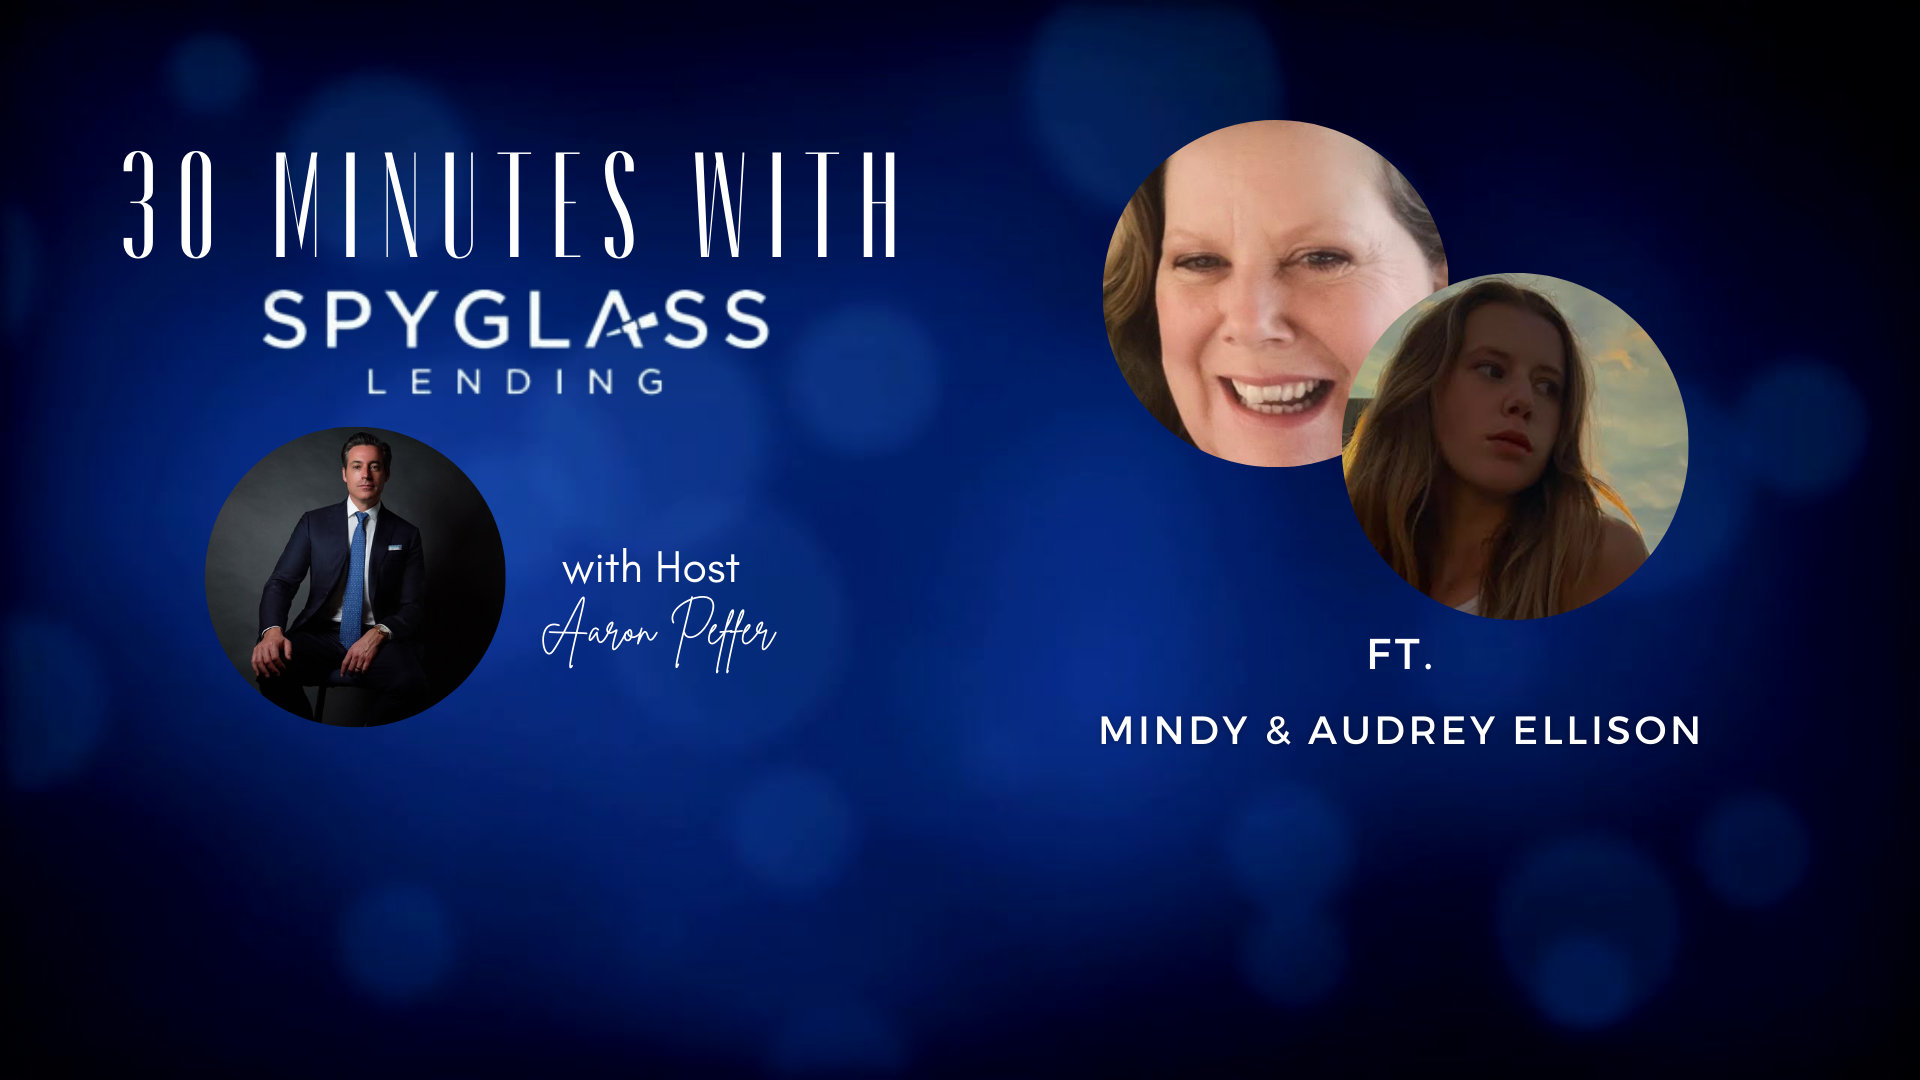 Mindy and Audrey Ellison | Spyglass Lending